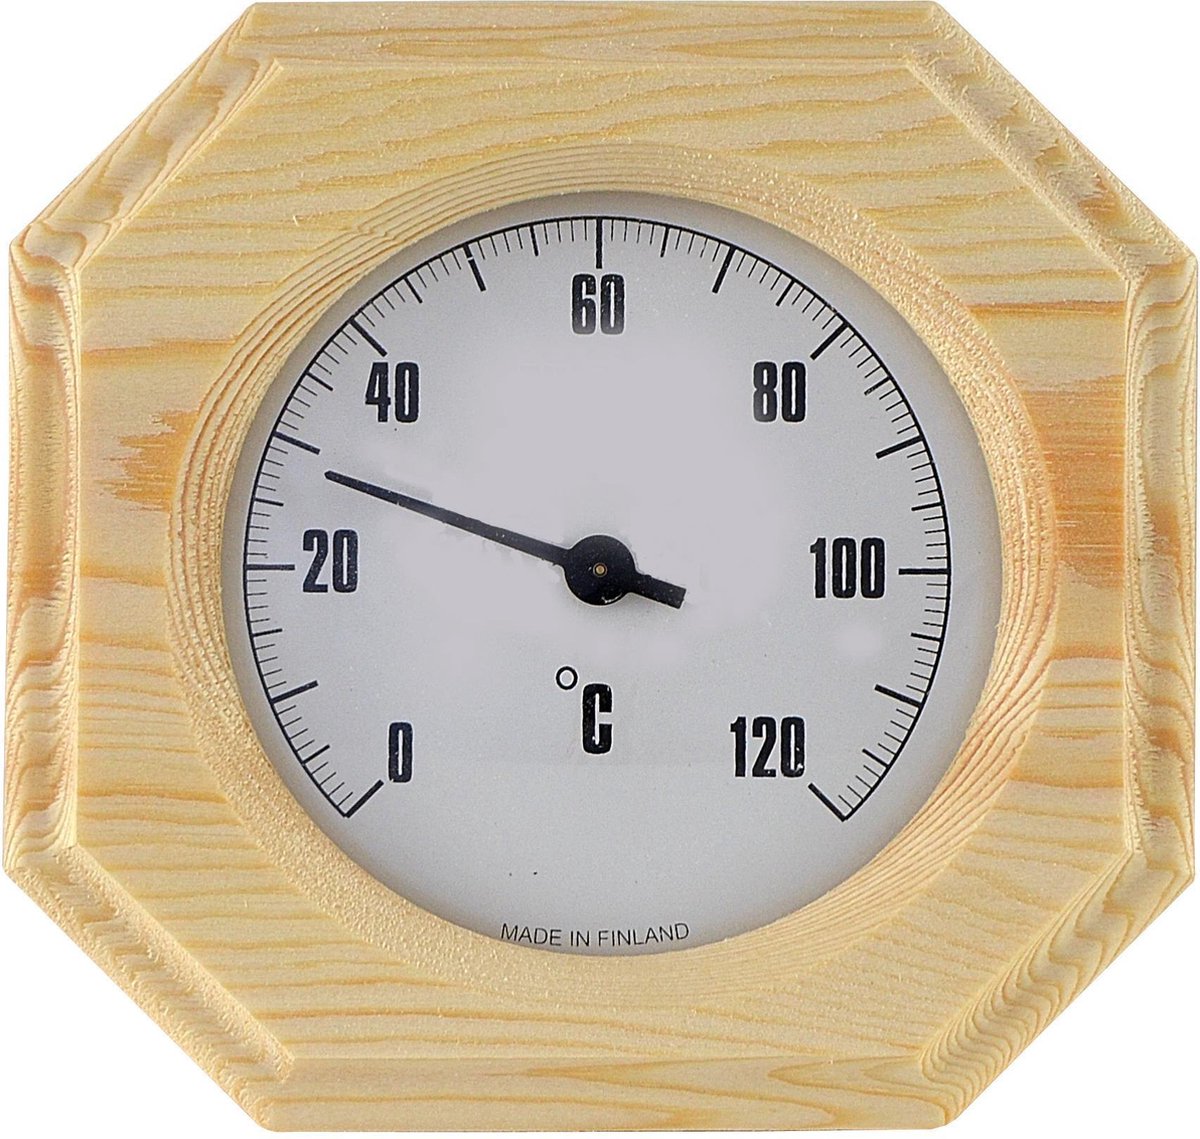 Saunia - sauna thermometer - pijnboomhout - saunia